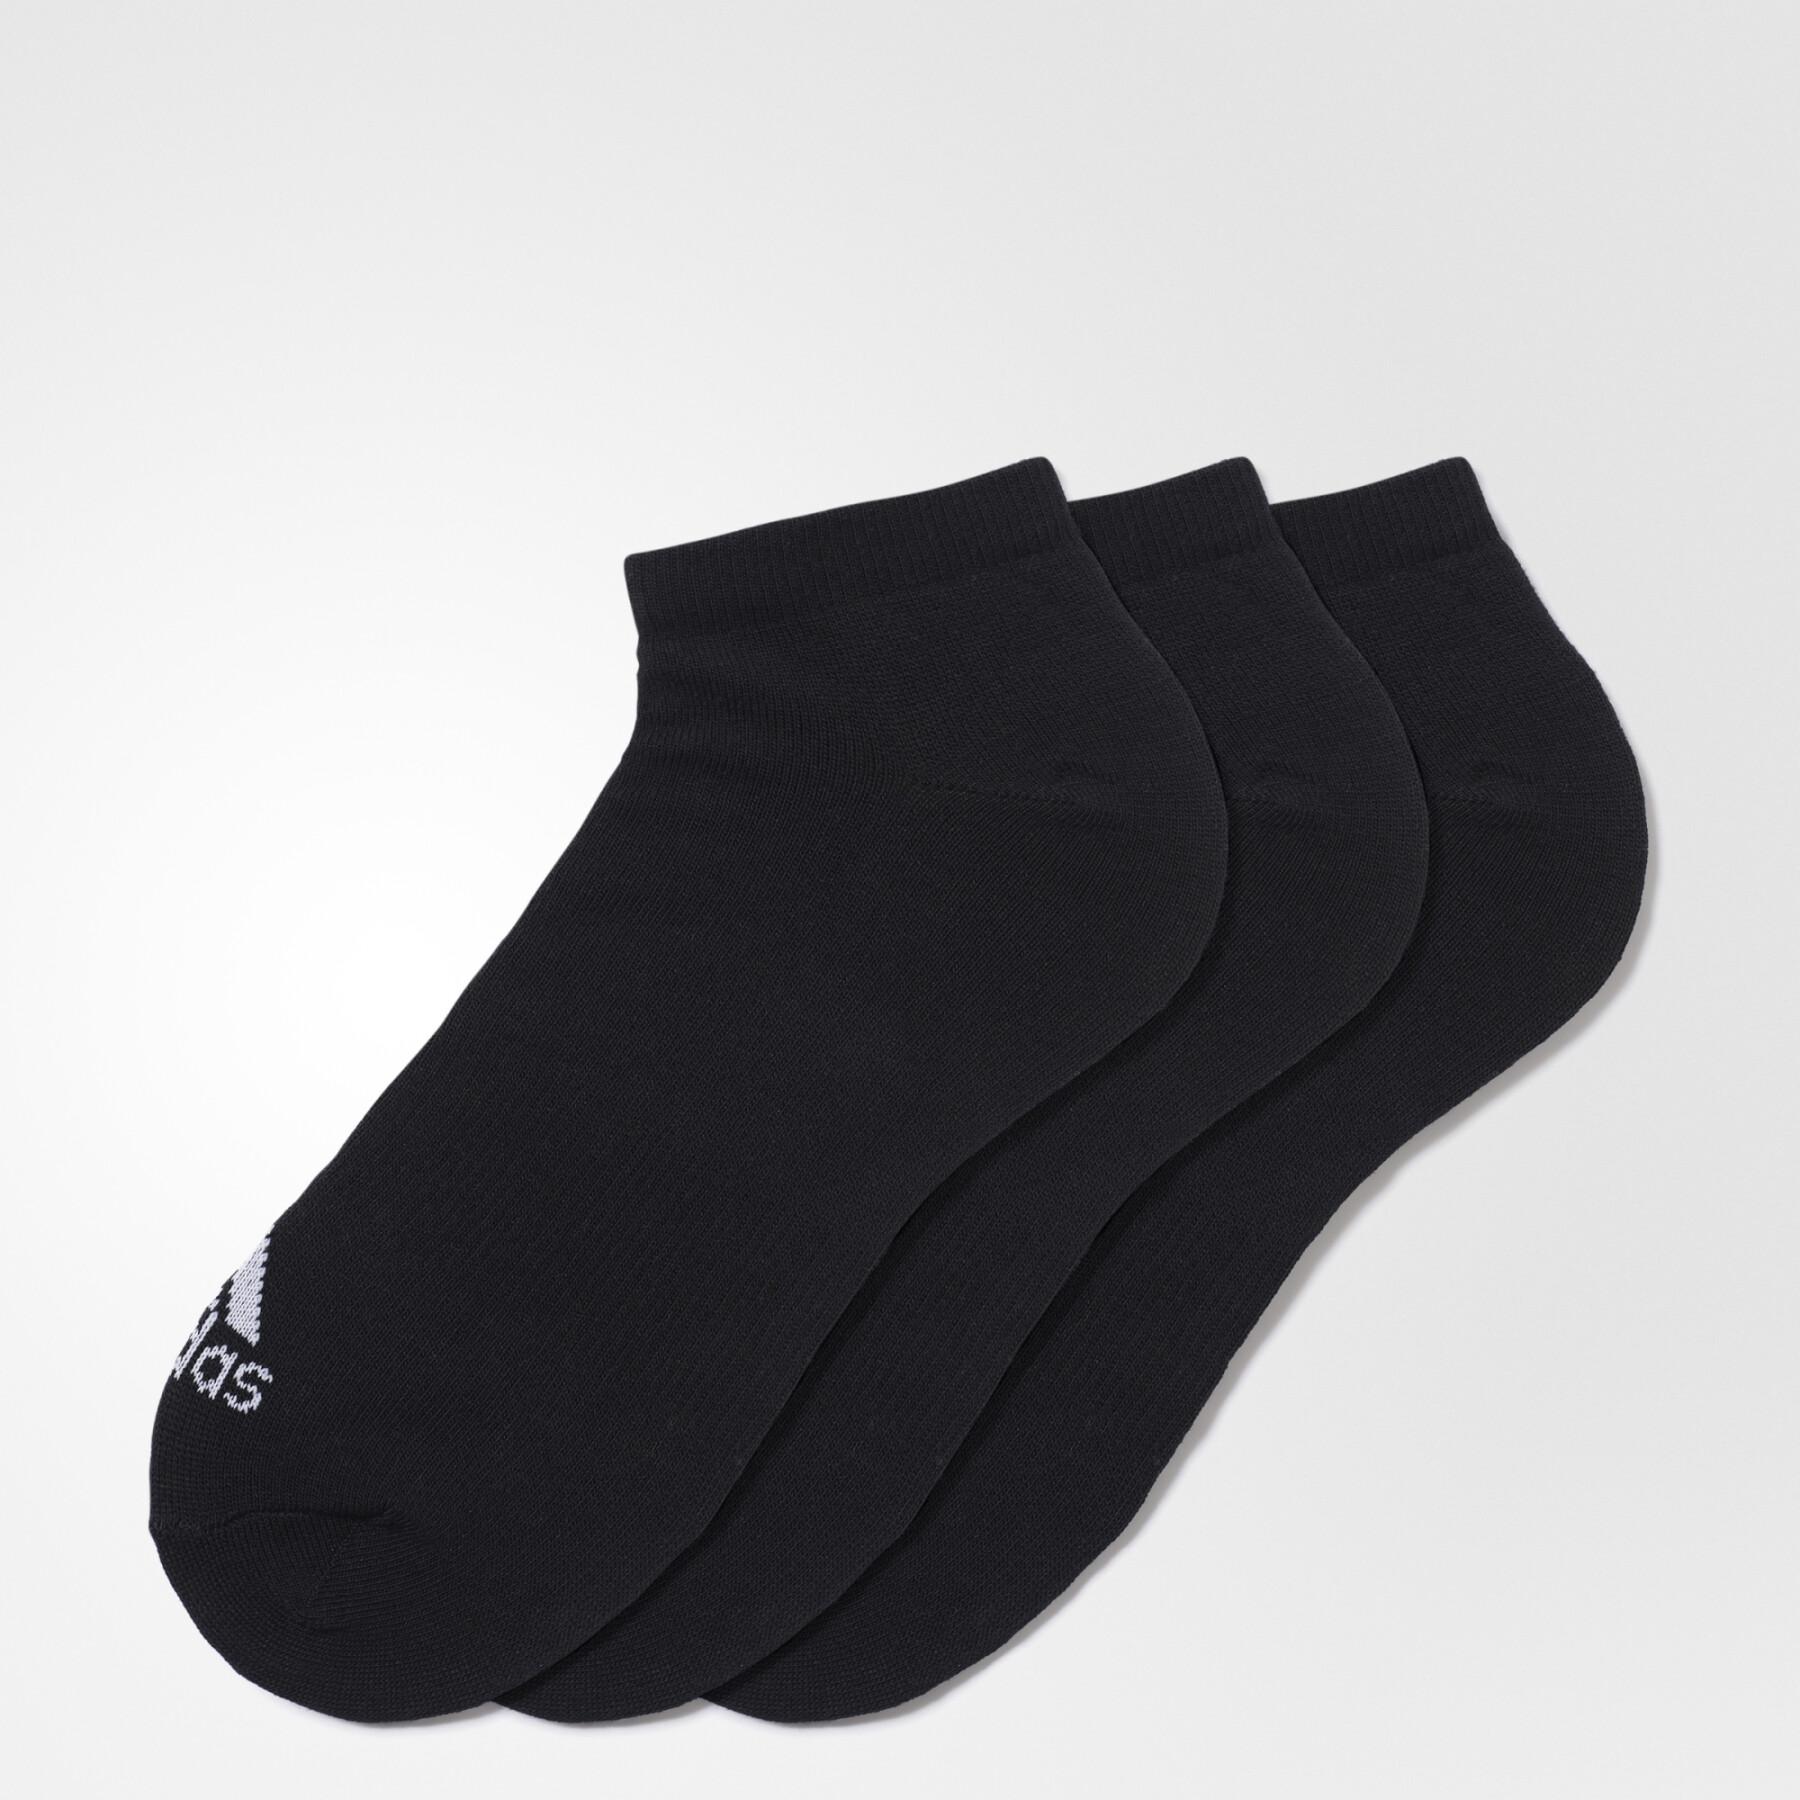 Fine socks adidas invisibles Performance (lot de 3 paires)